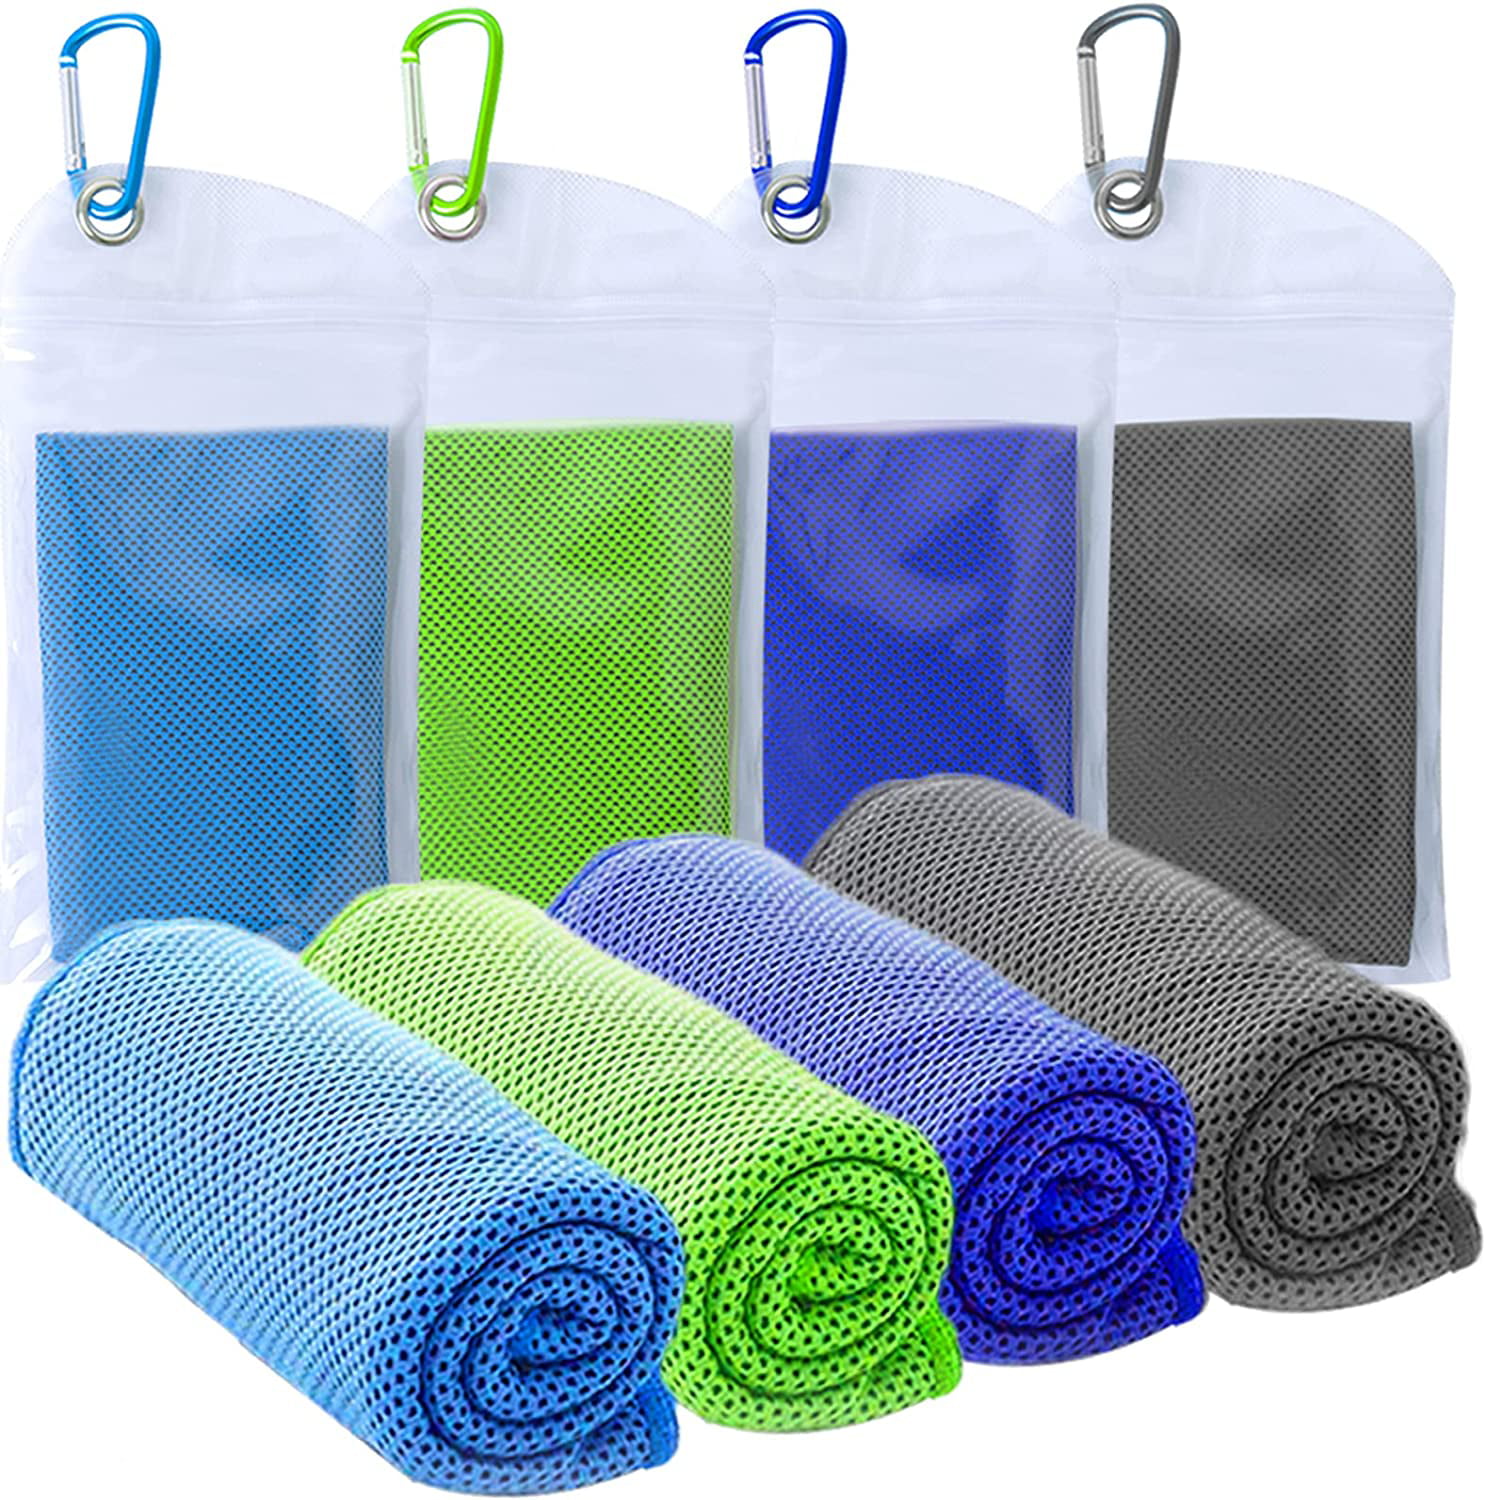 Travel Microfiber Towel Quick Drying Sport Towels Gym Yoga Towel Tennis Towels 